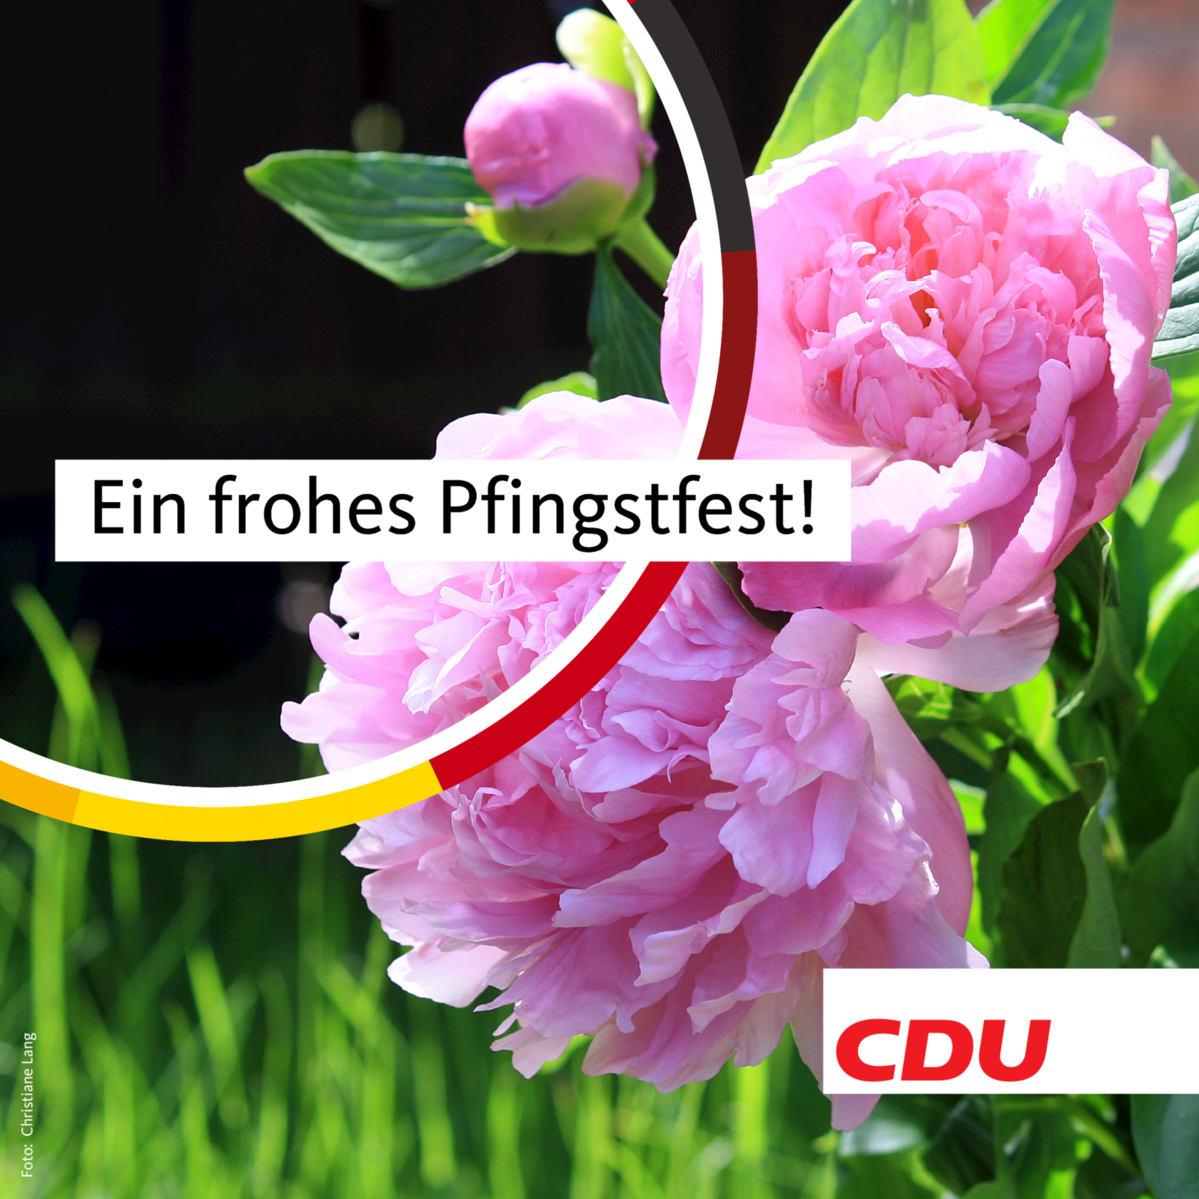 Der CDU-Stadtverband wünscht sonnige Pfingsten!